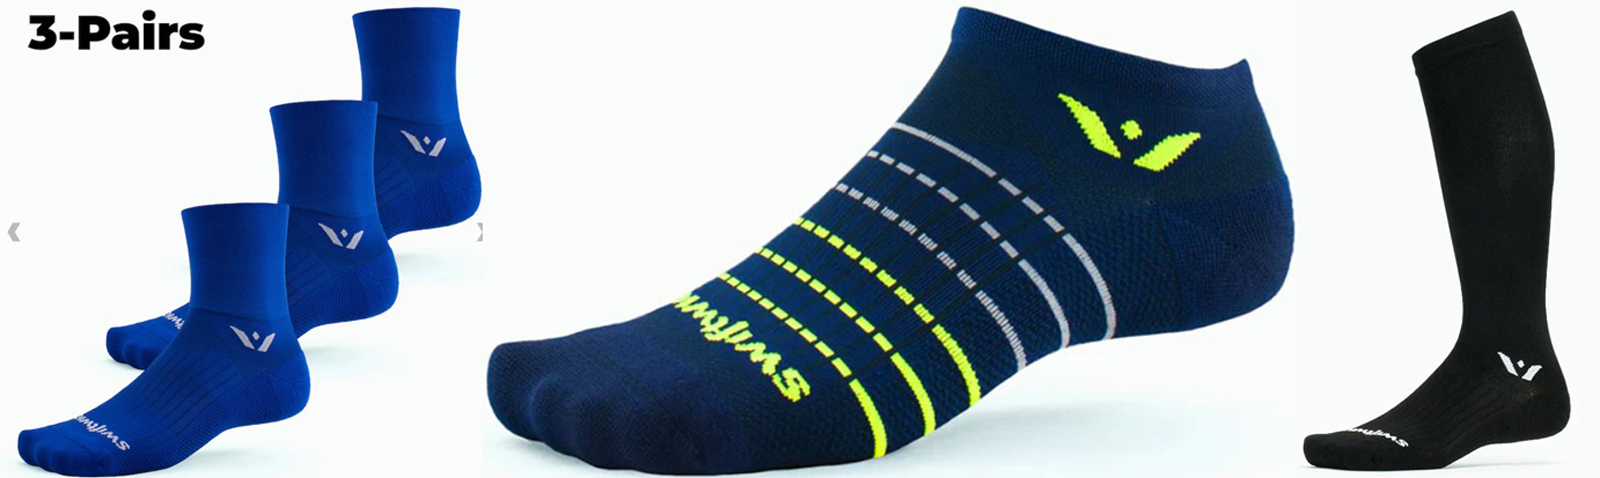 swiftwick holiday sale socks 25% off